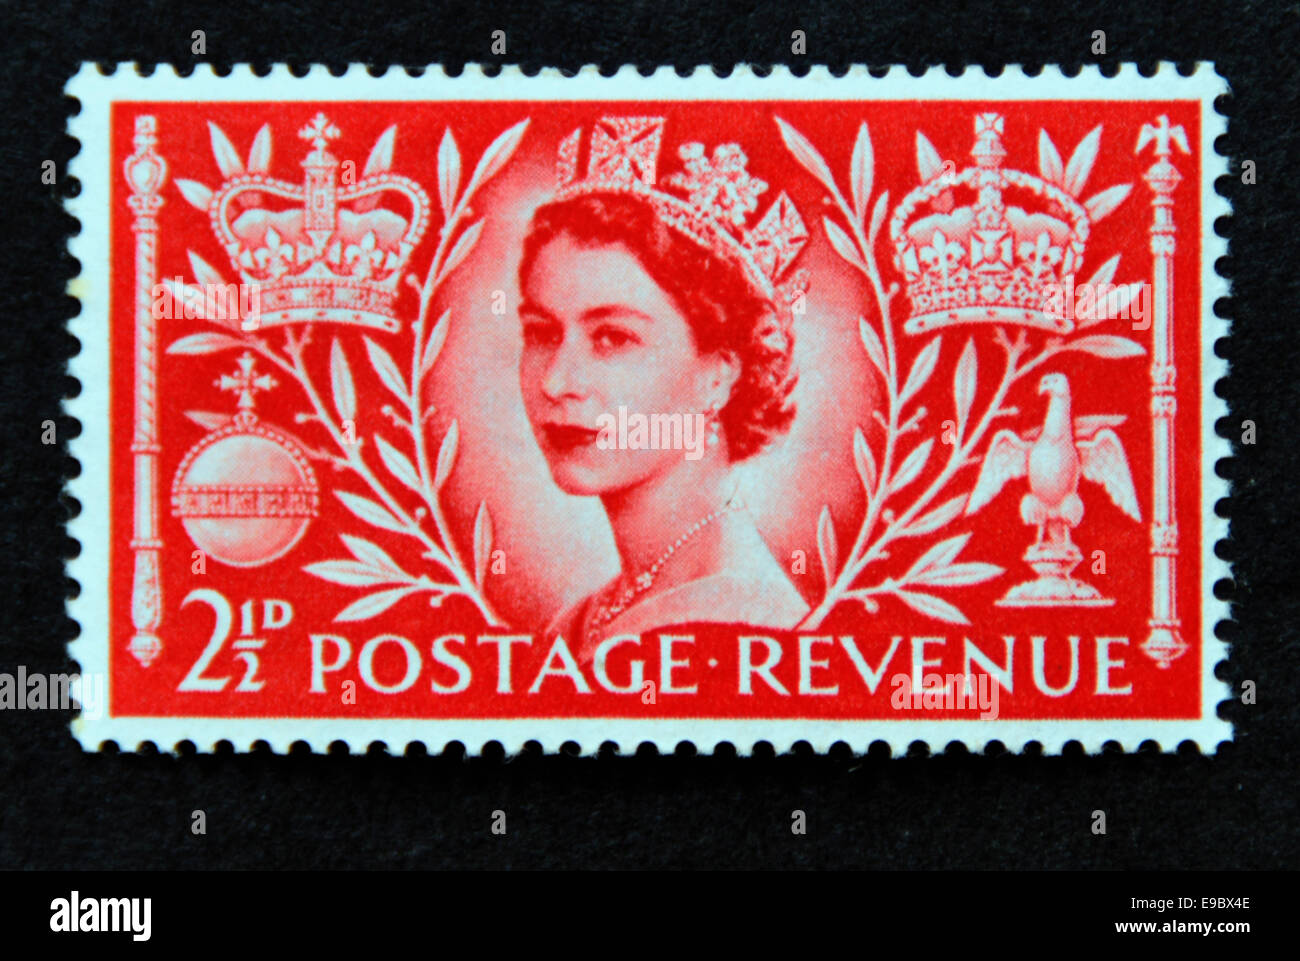 Postage stamp. Great Britain Queen Elizabeth II. Coronation. 1953. Stock Photo